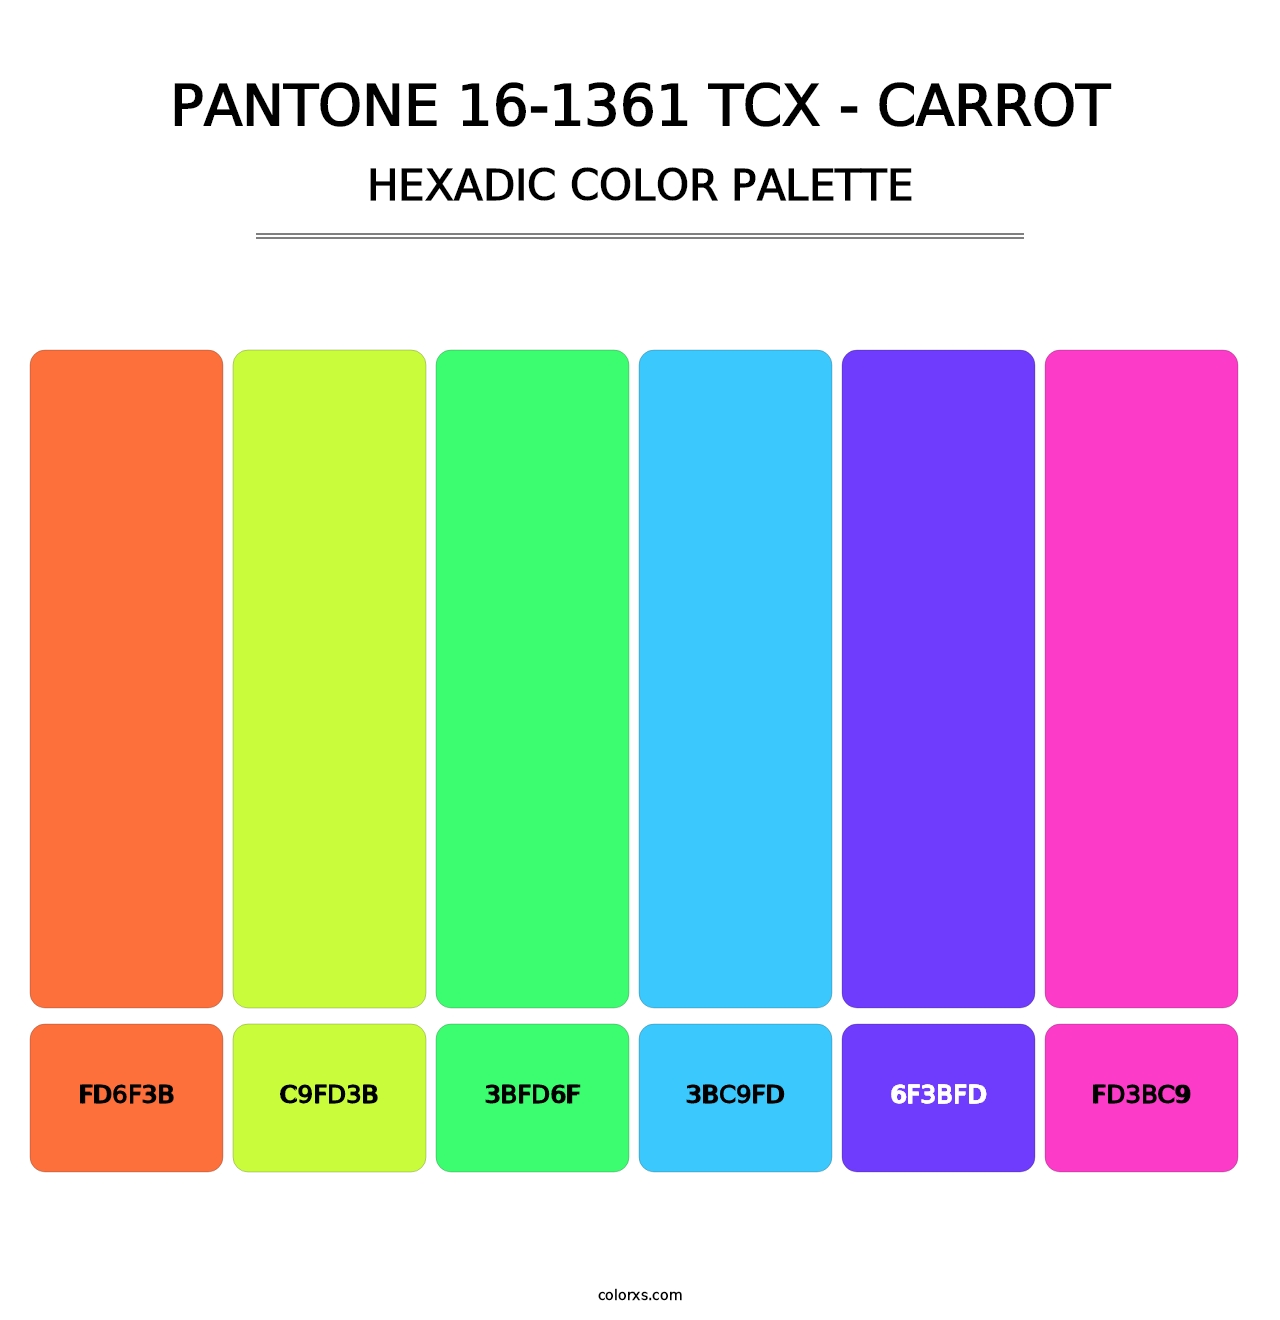 PANTONE 16-1361 TCX - Carrot - Hexadic Color Palette